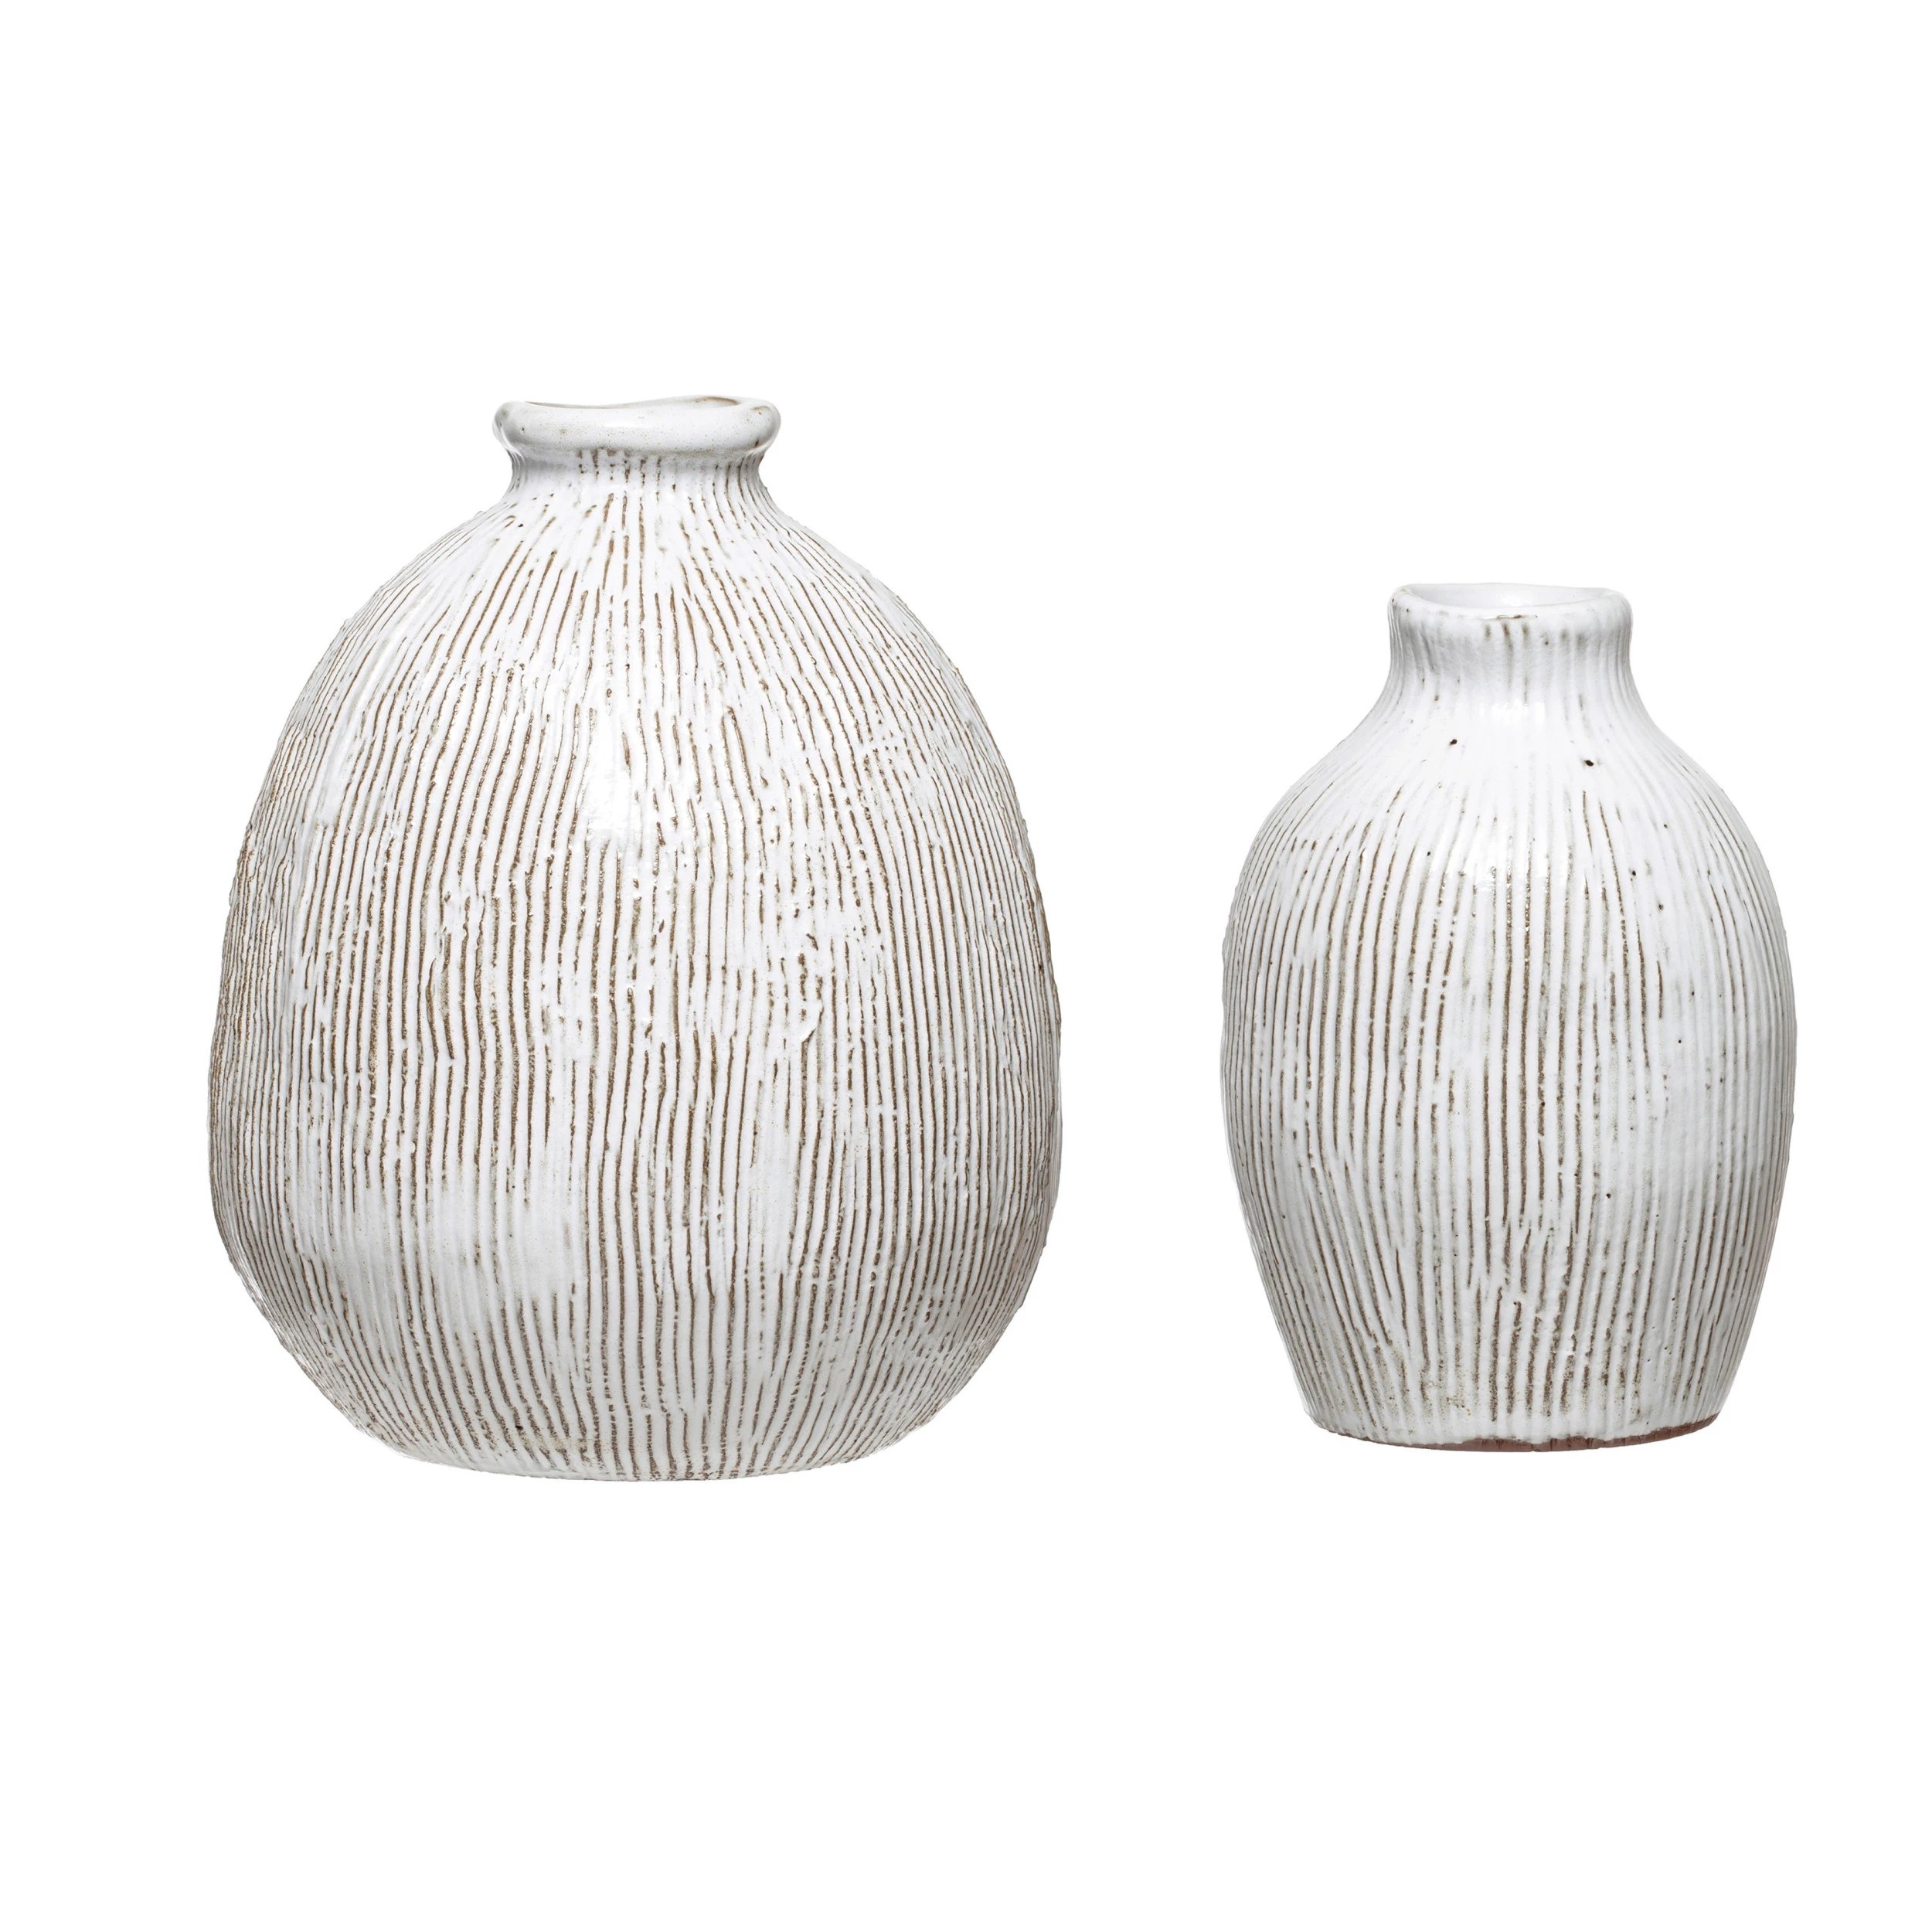 Terra cotta Vase, White - Image 3